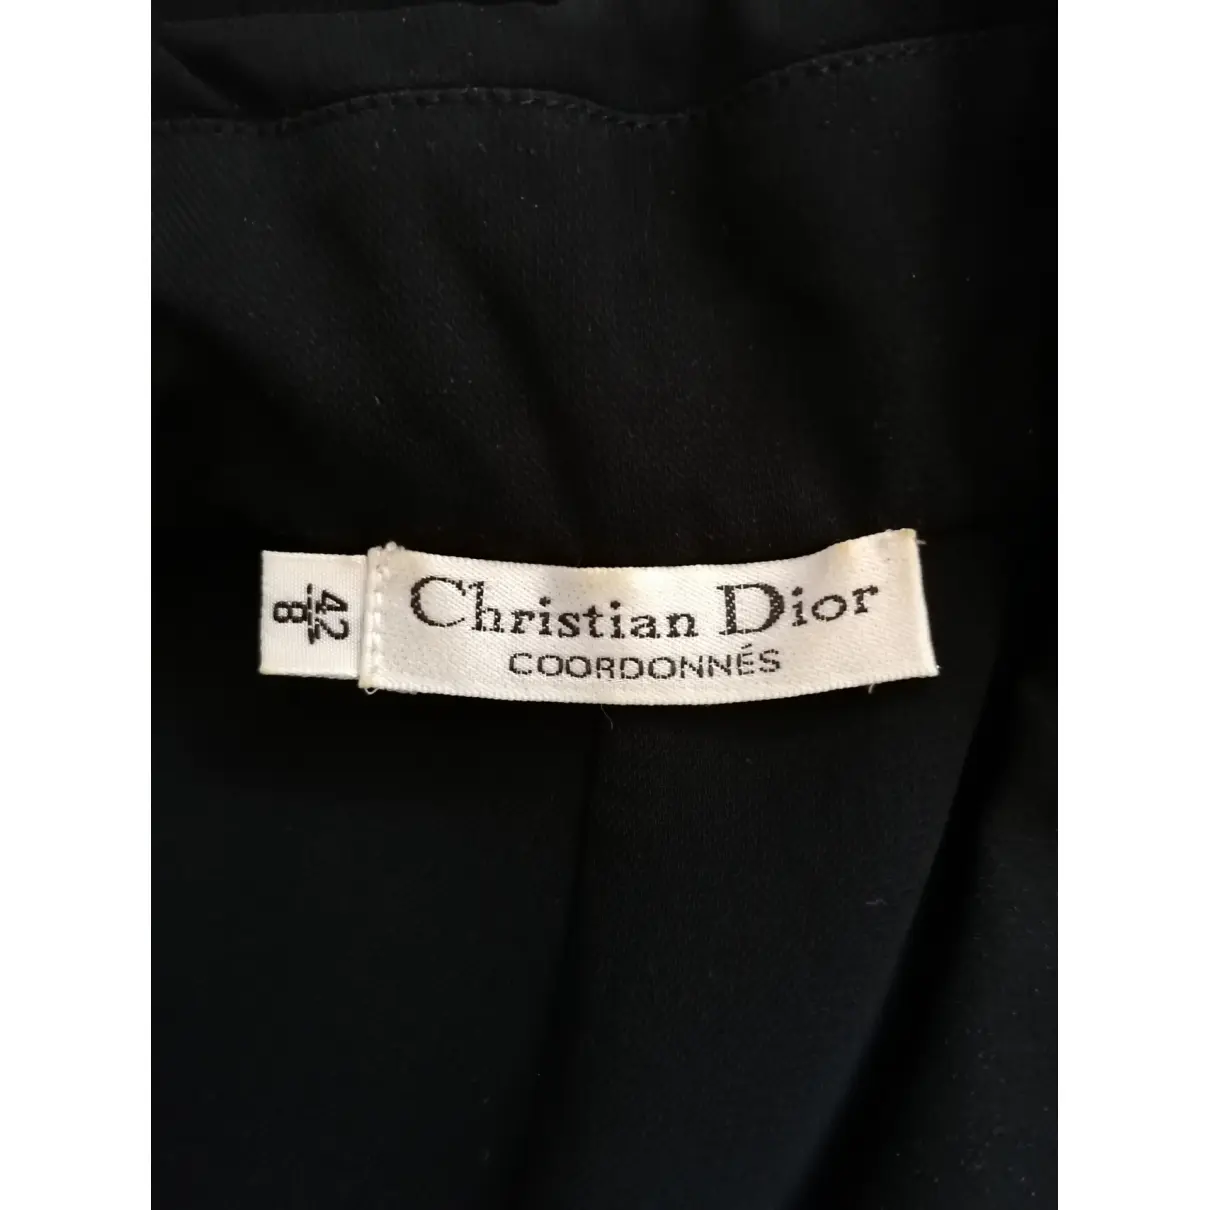 Blouse Christian Dior